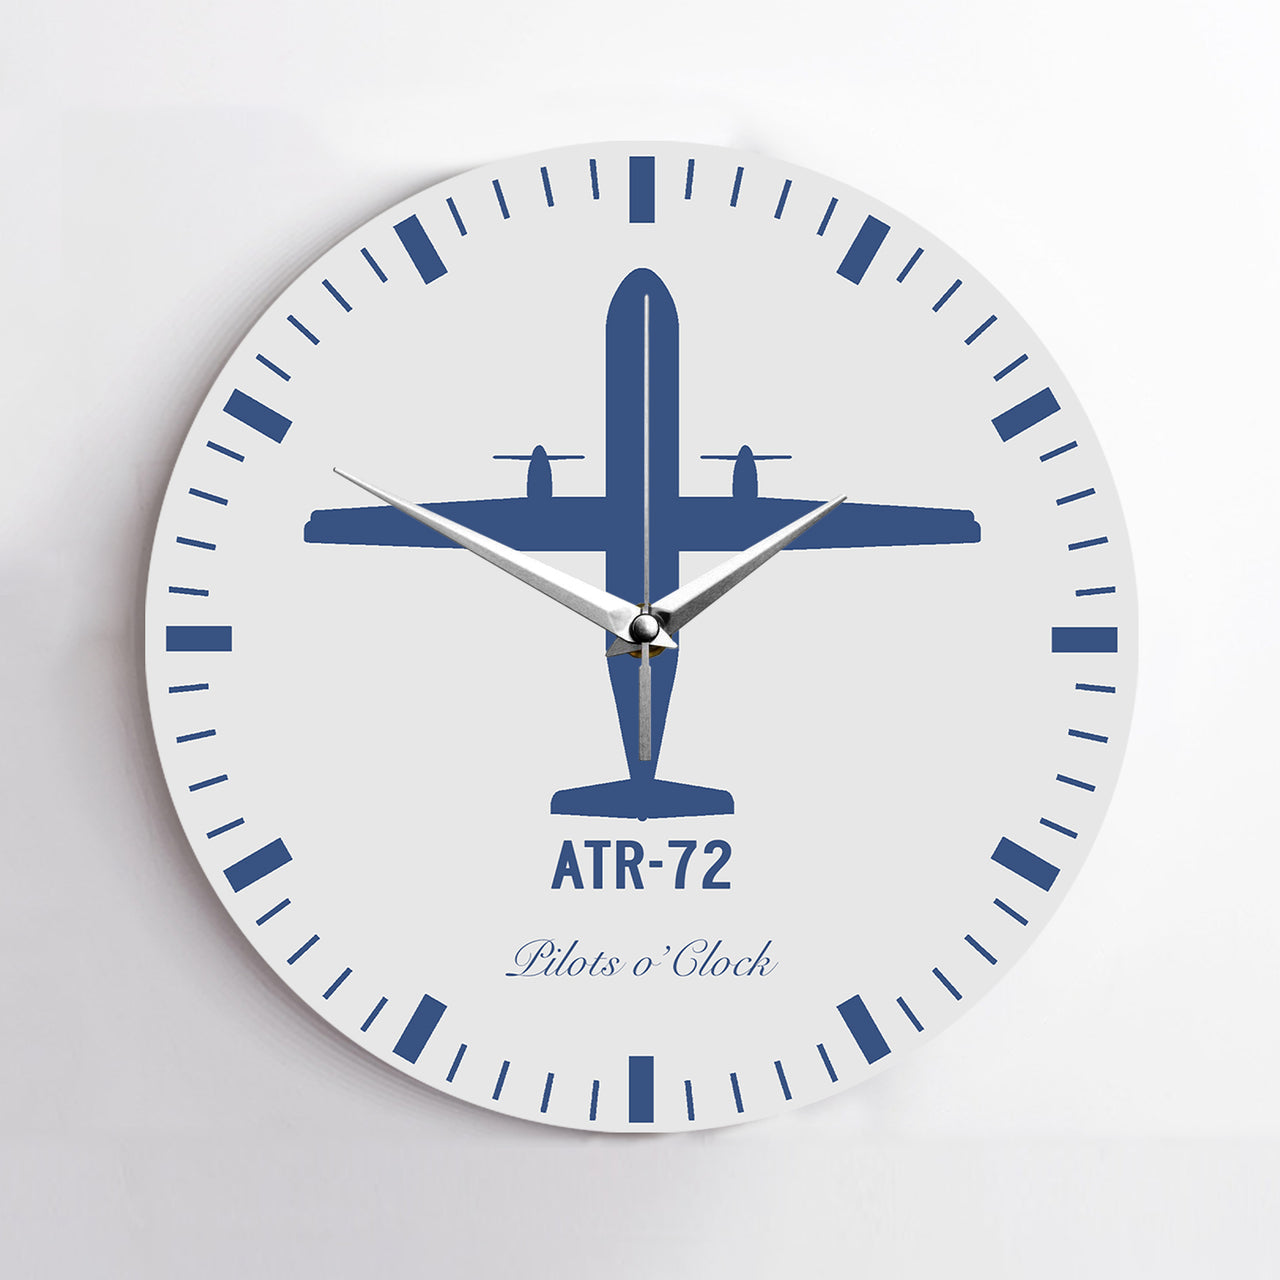 ATR-72 Printed Wall Clocks